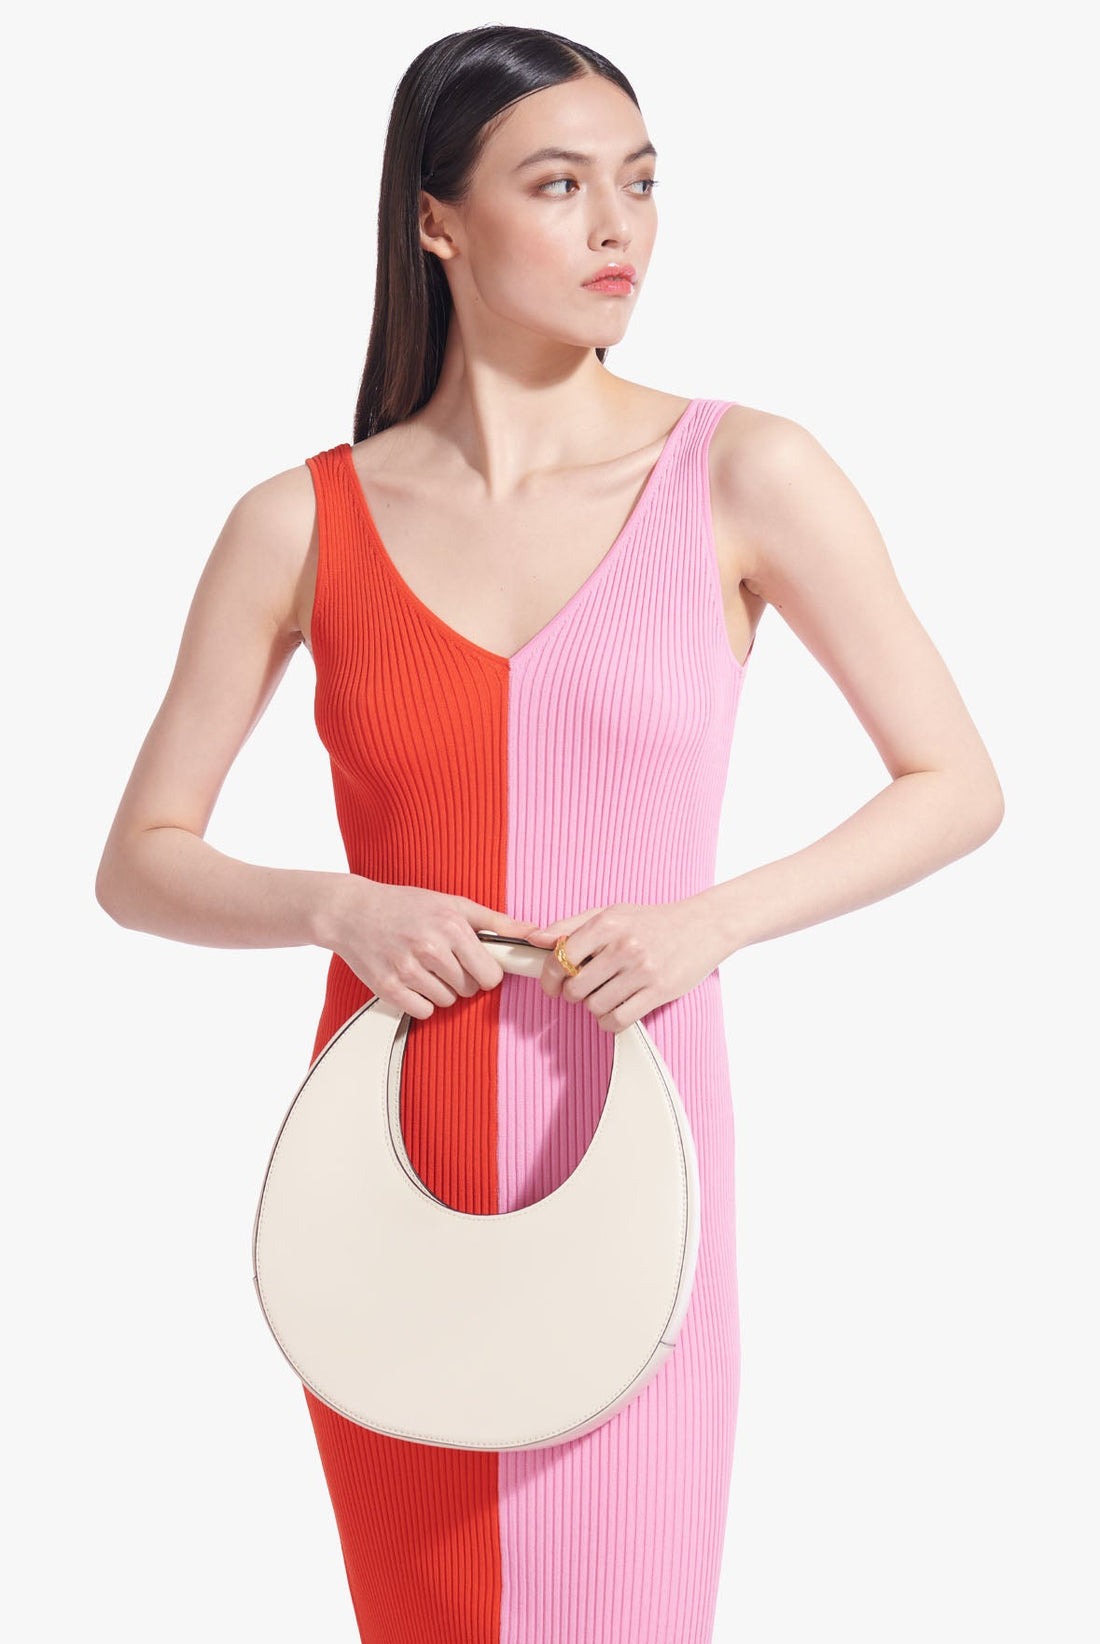 Moonlit Elegance: Chic Crescent Moon Shape Handbag at Whimsical Wonders Boutique™